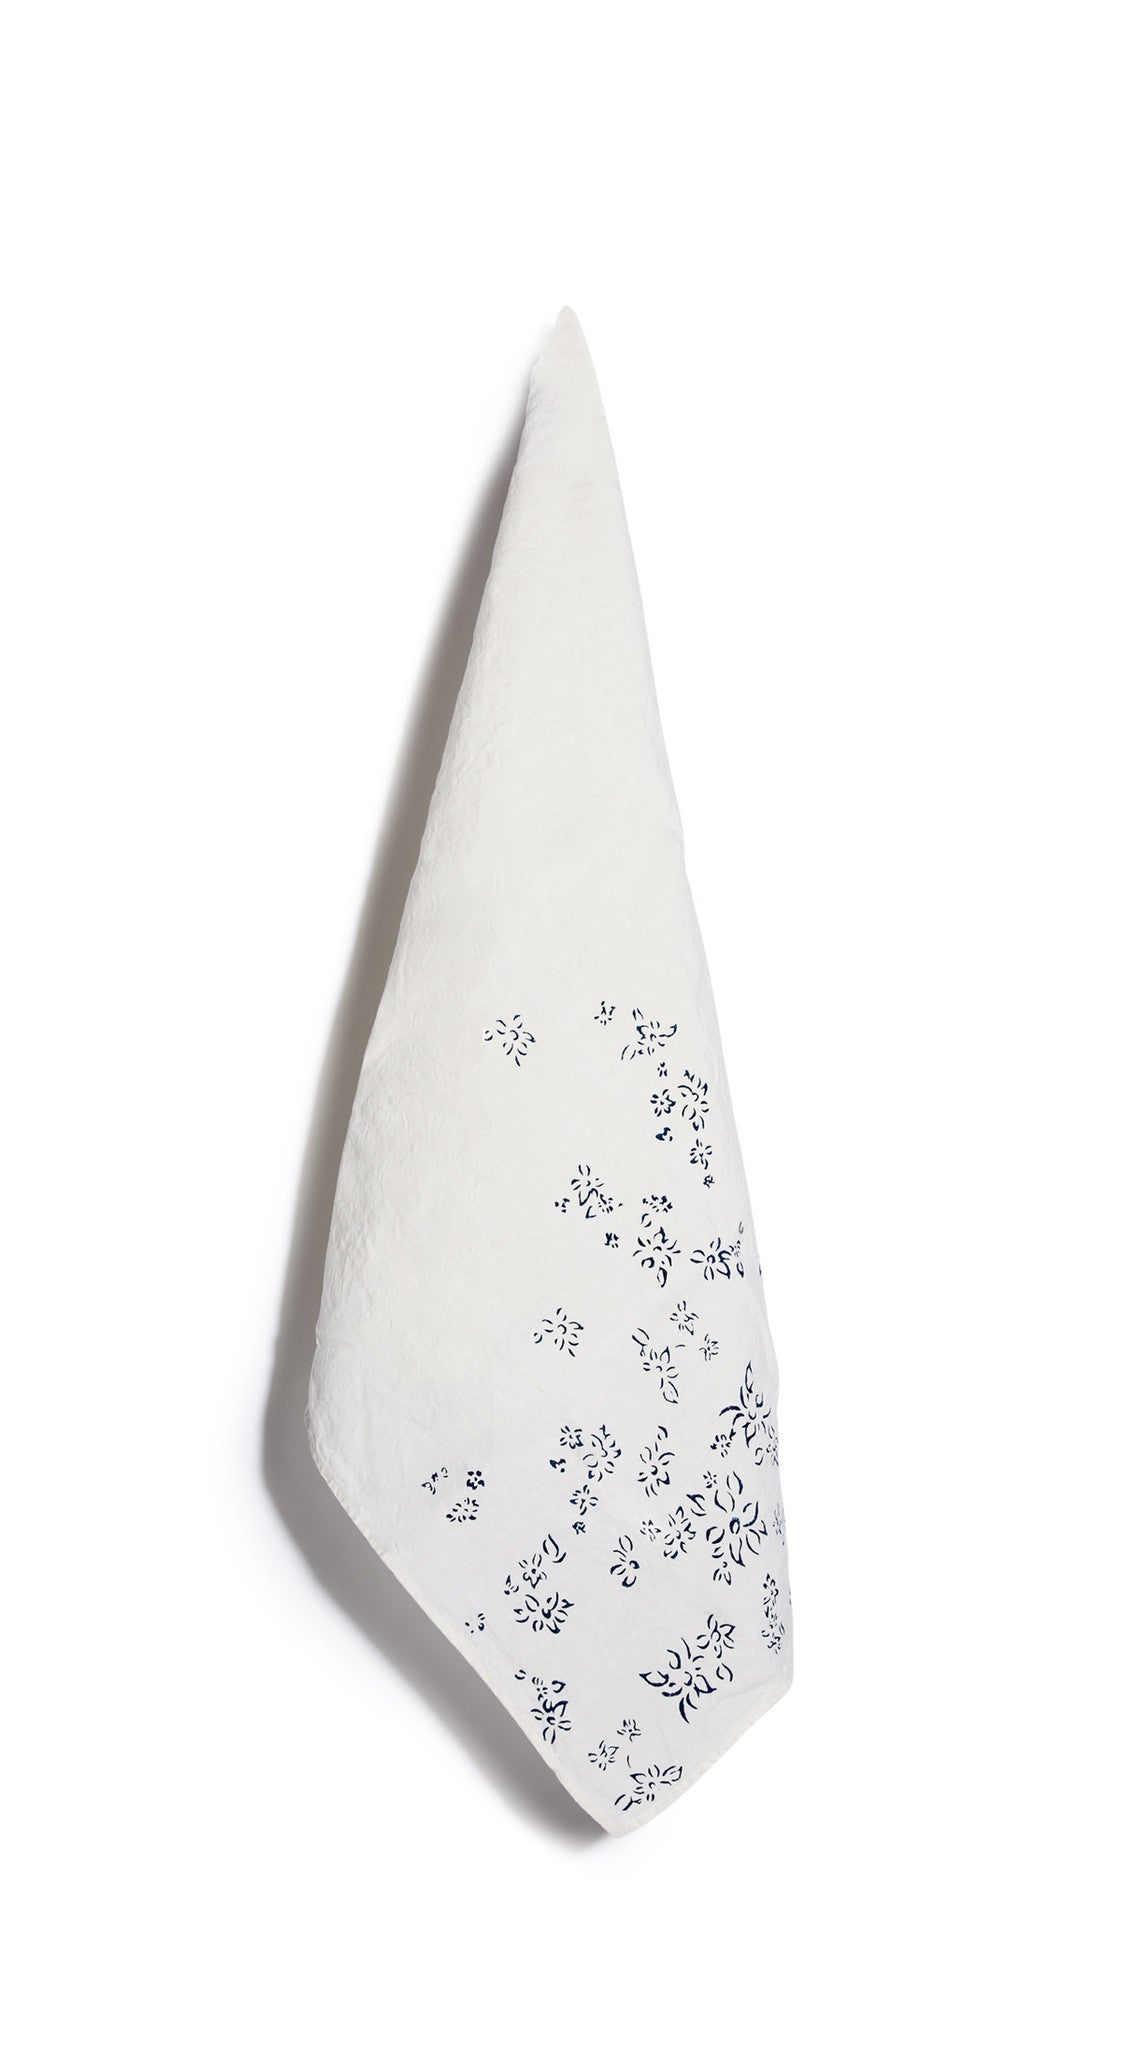 Bernadette's Hand Stamped Falling Flower Linen Tea Towel in Midnight Blue, 55x70cm